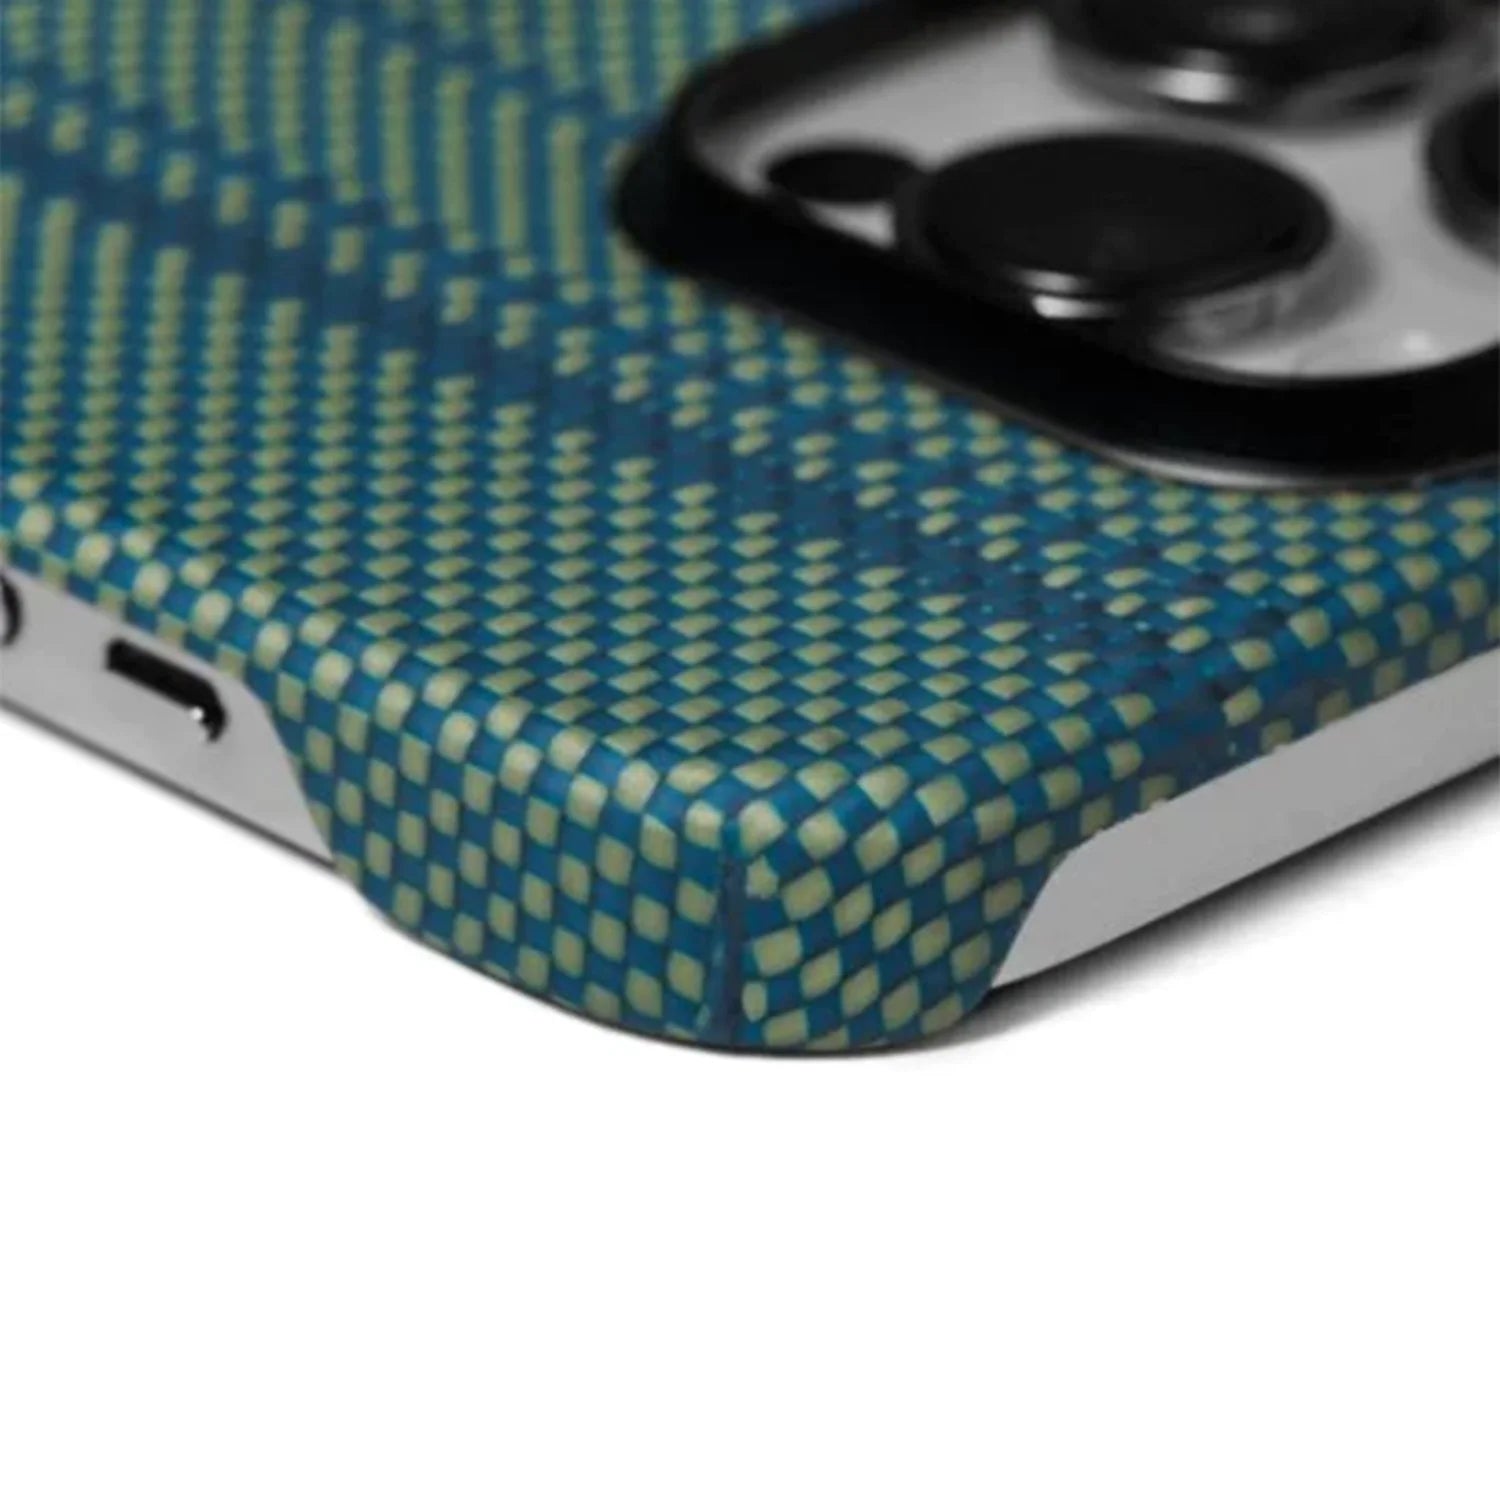 PITAKA [Weaving+ Limited Edition] Fusion Weaving Jacquard Weaving Military-grade Ultra Thin Lightweight Aramid Fiber MagEZ Case 3 Pixel Game Bundle Kit for iPhone 14 Pro 6.1" / iPhone 14 Pro Max 6.7"